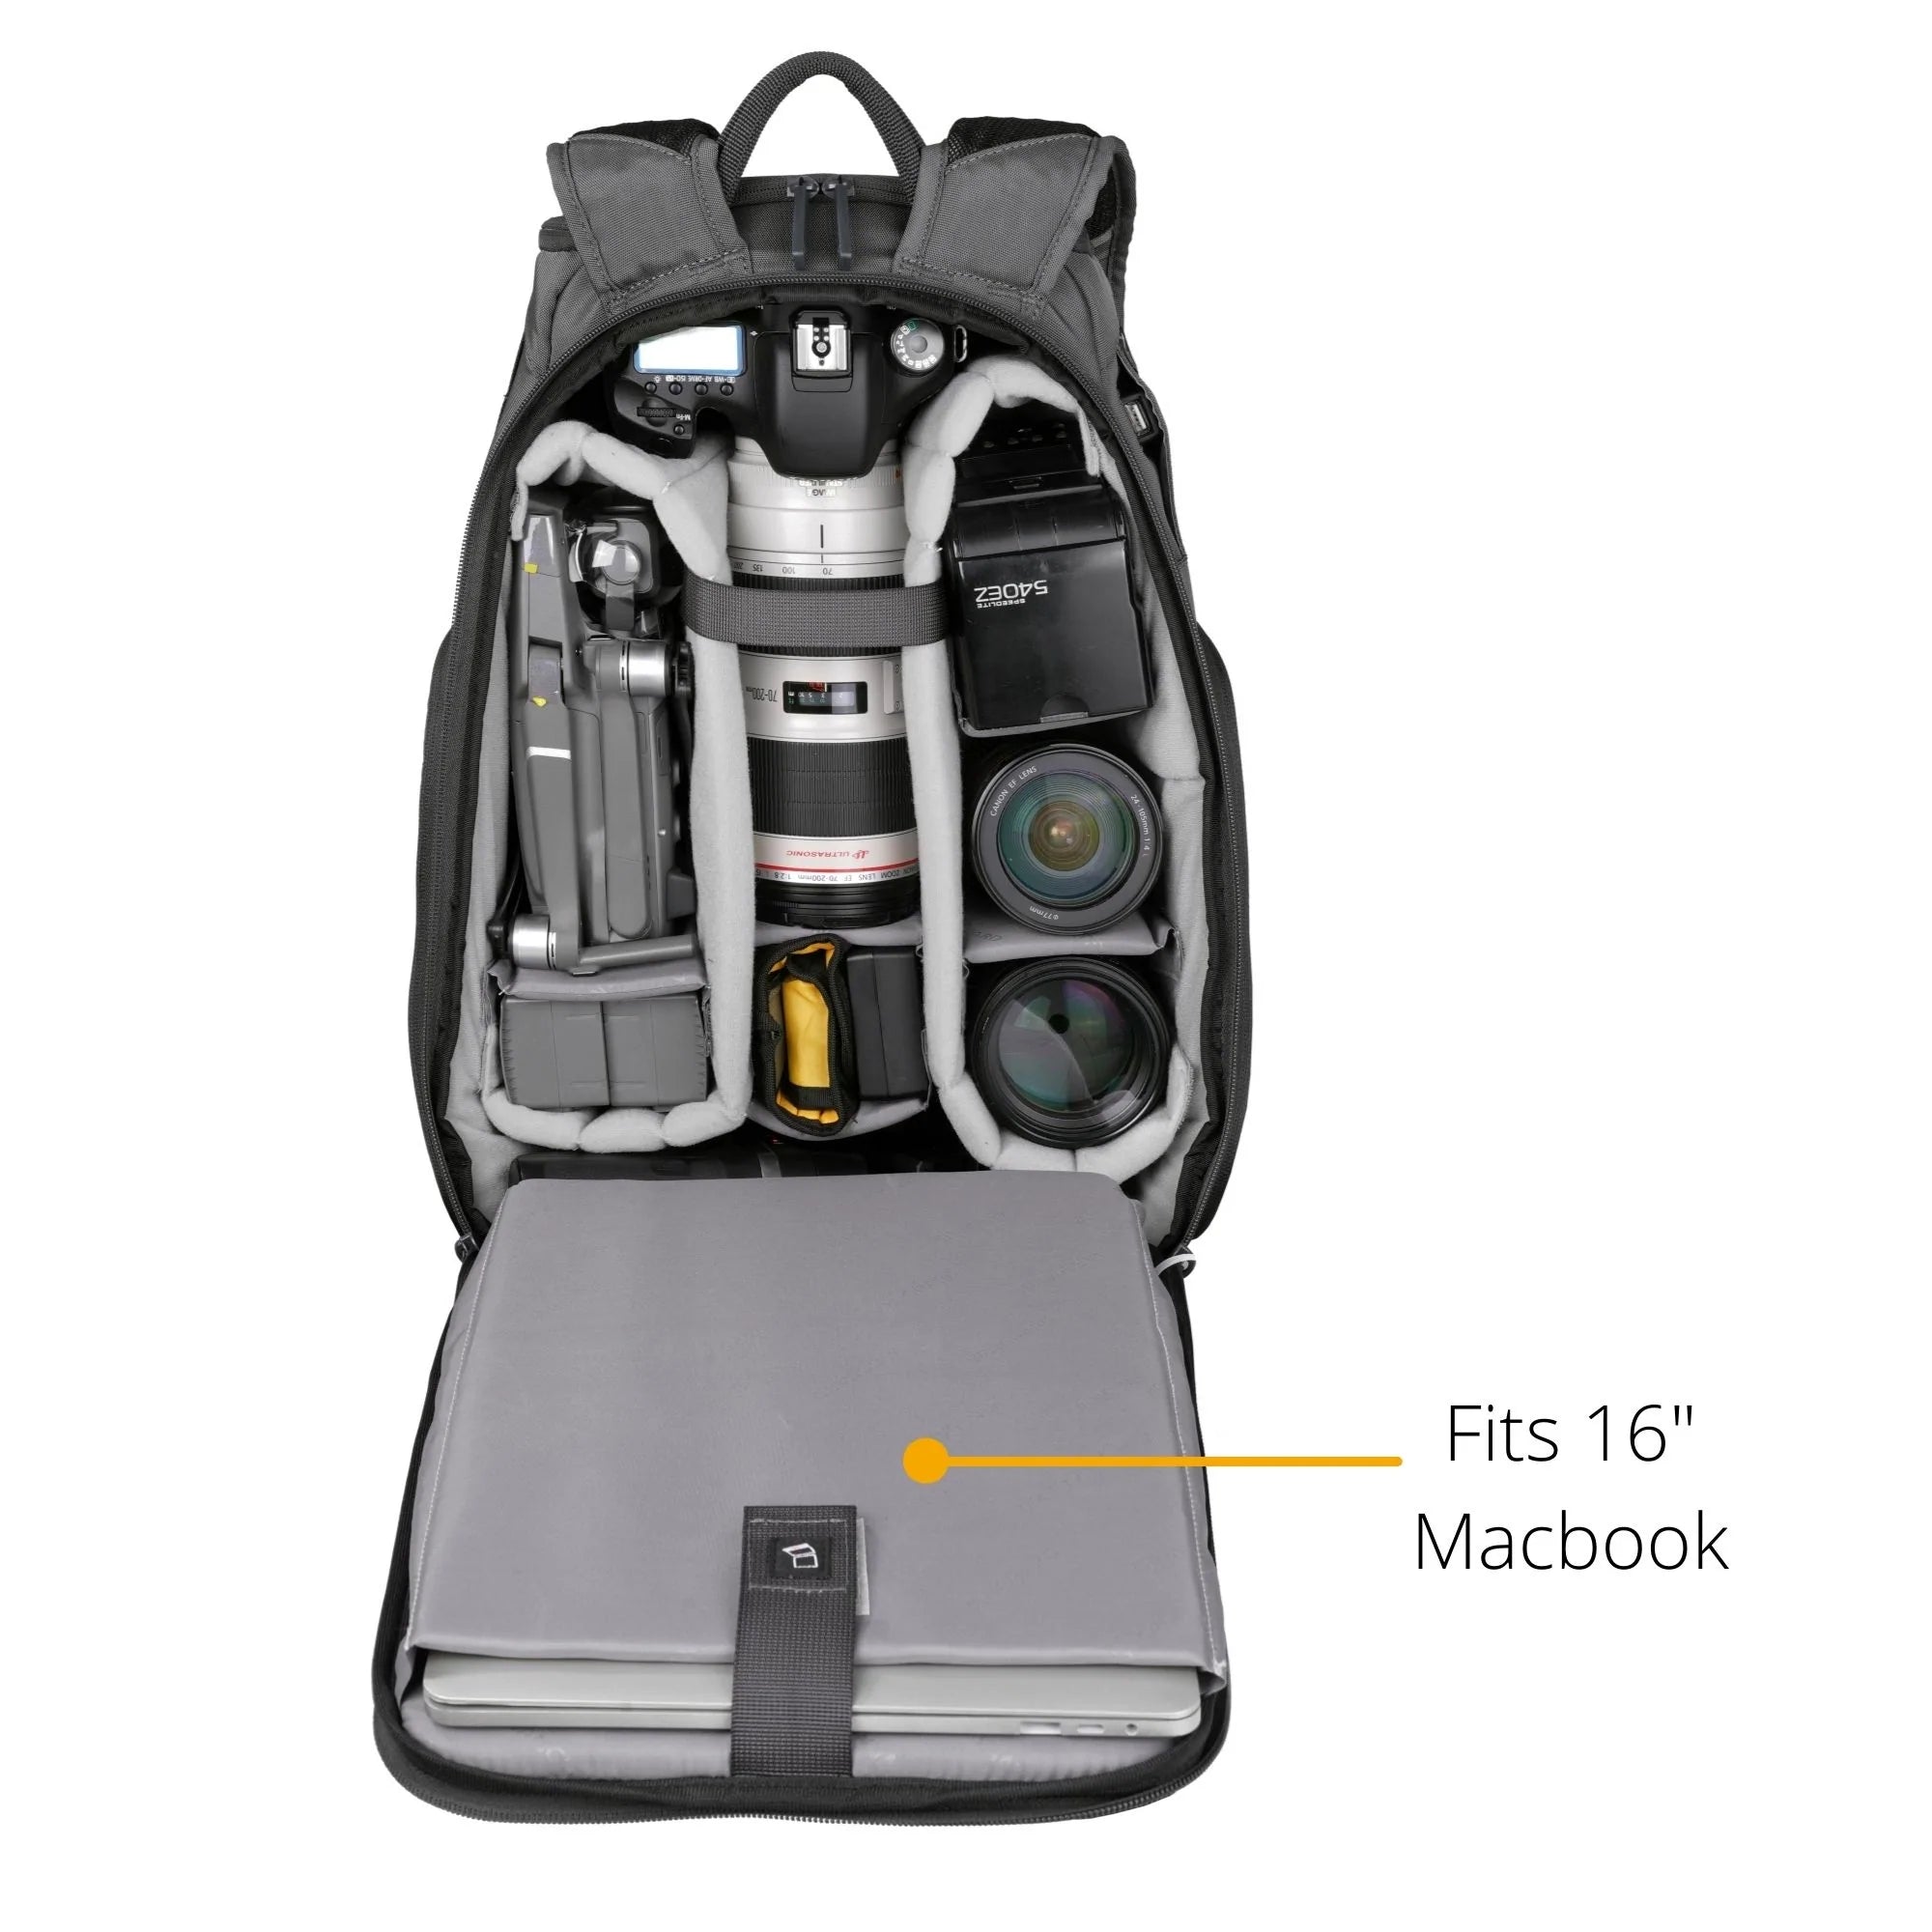 Vanguard VEO adaptor R48 BK backpack with USB port - rear access